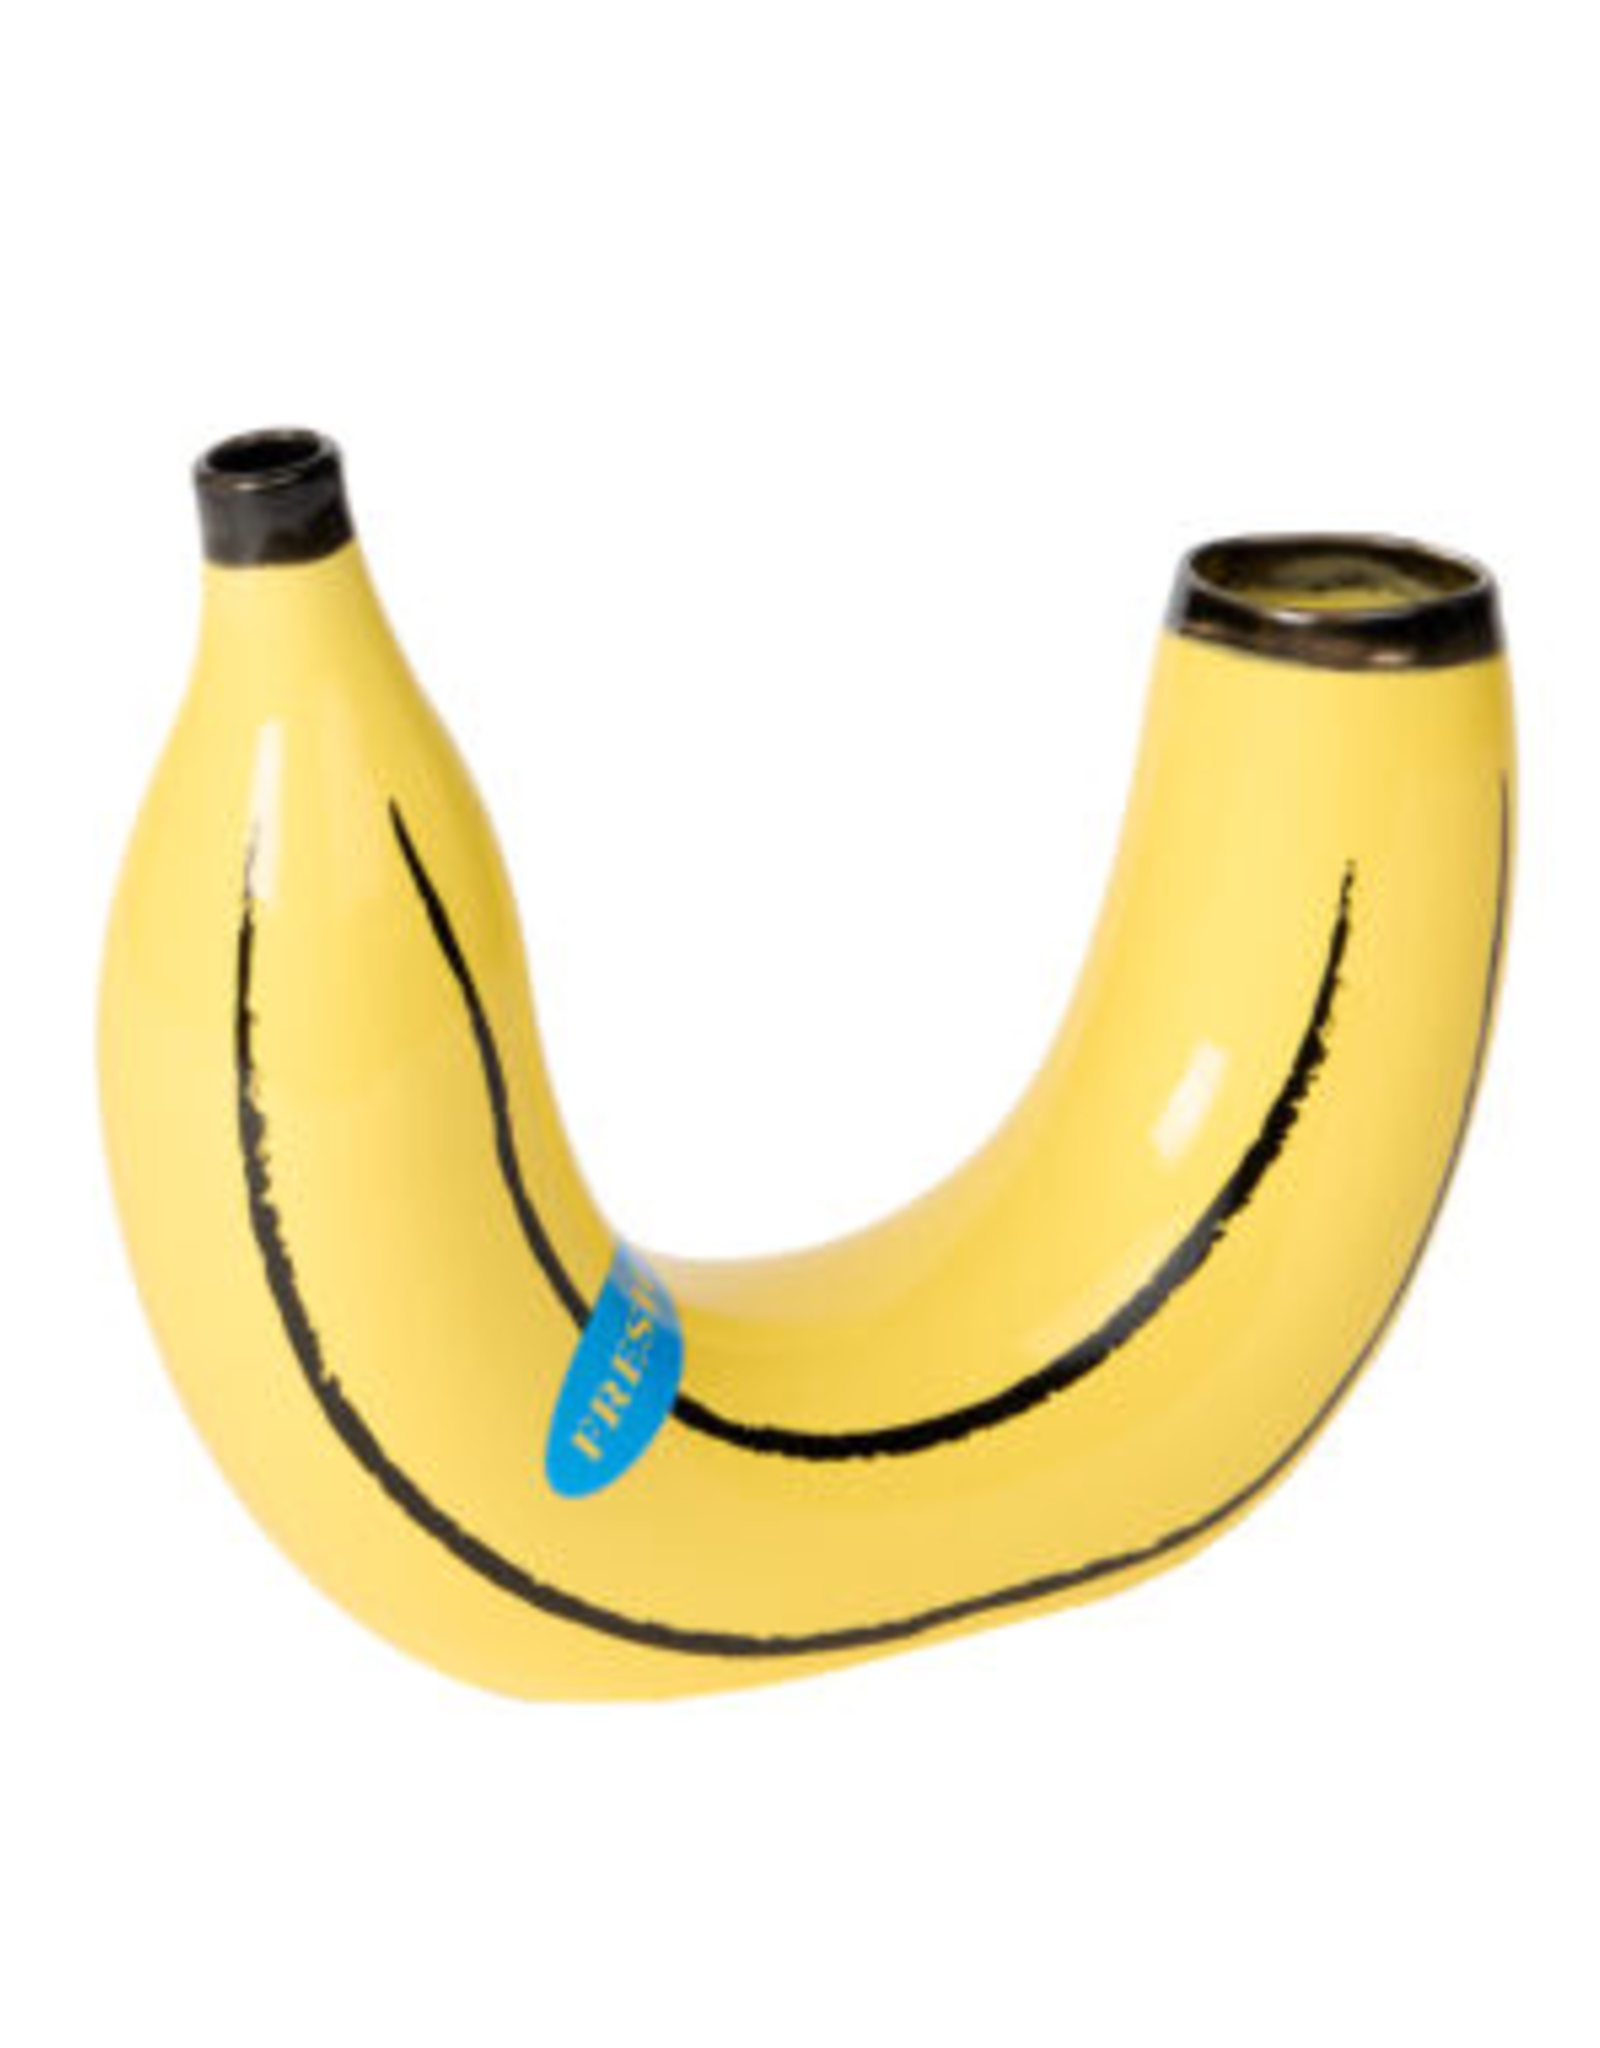 Doiy Vase - Banana Yellow